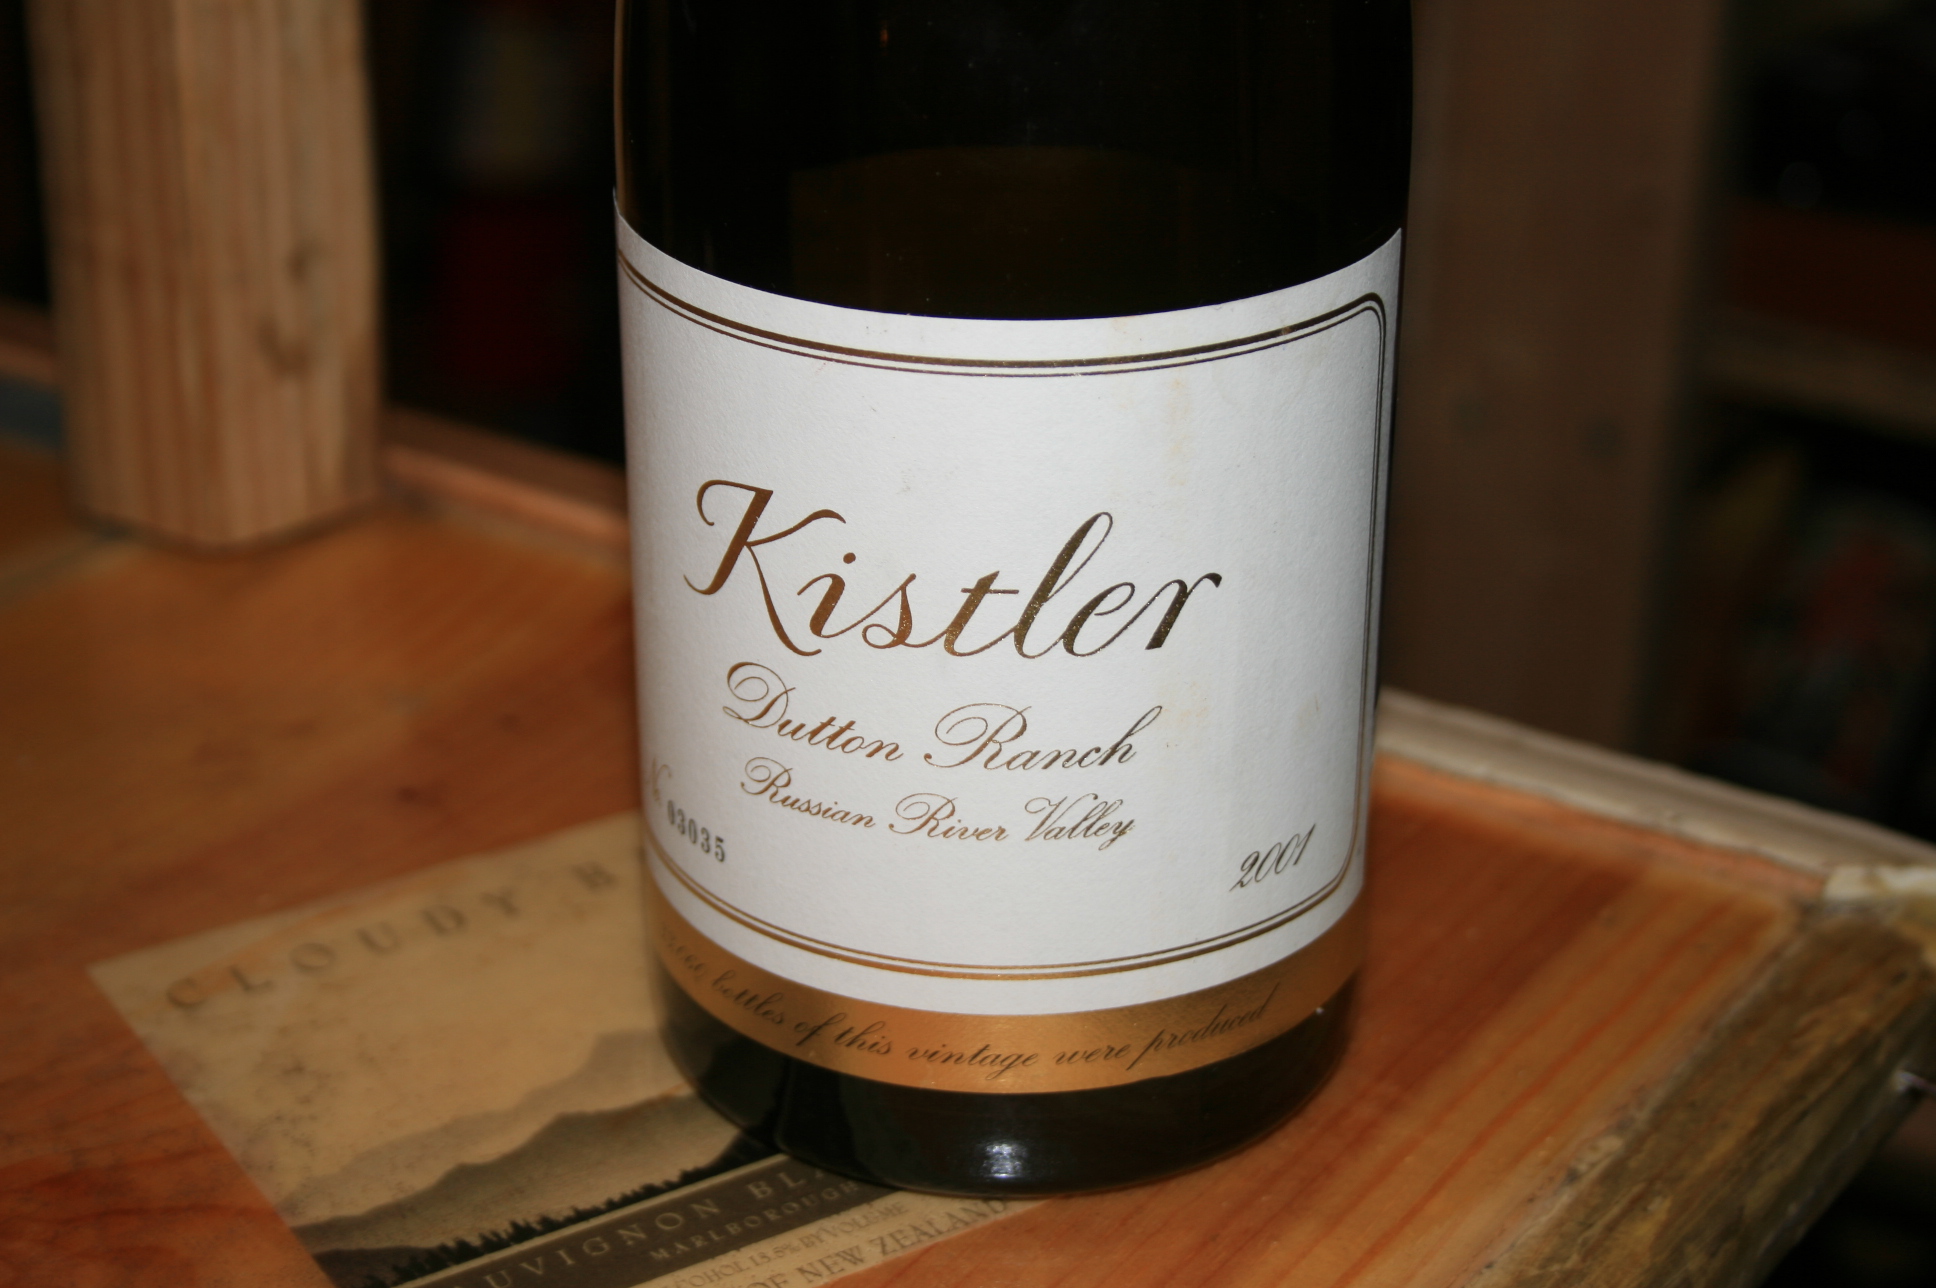 2011 Kistler Chardonnay Dutton Ranch Sonoma Coast - click image for full description